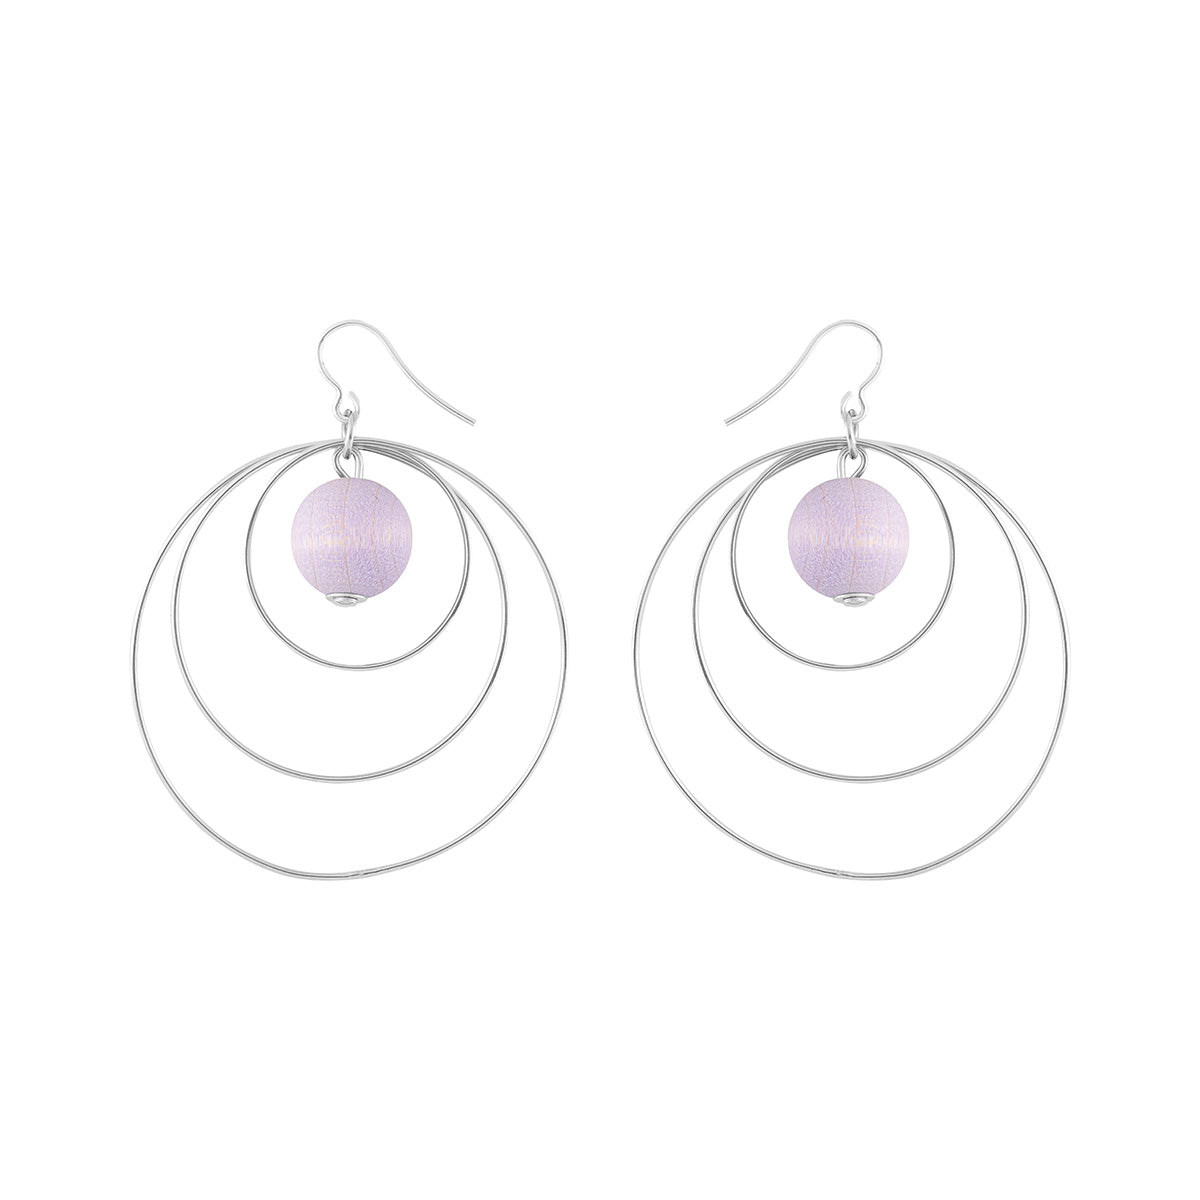 Piruetti earrings, lavender